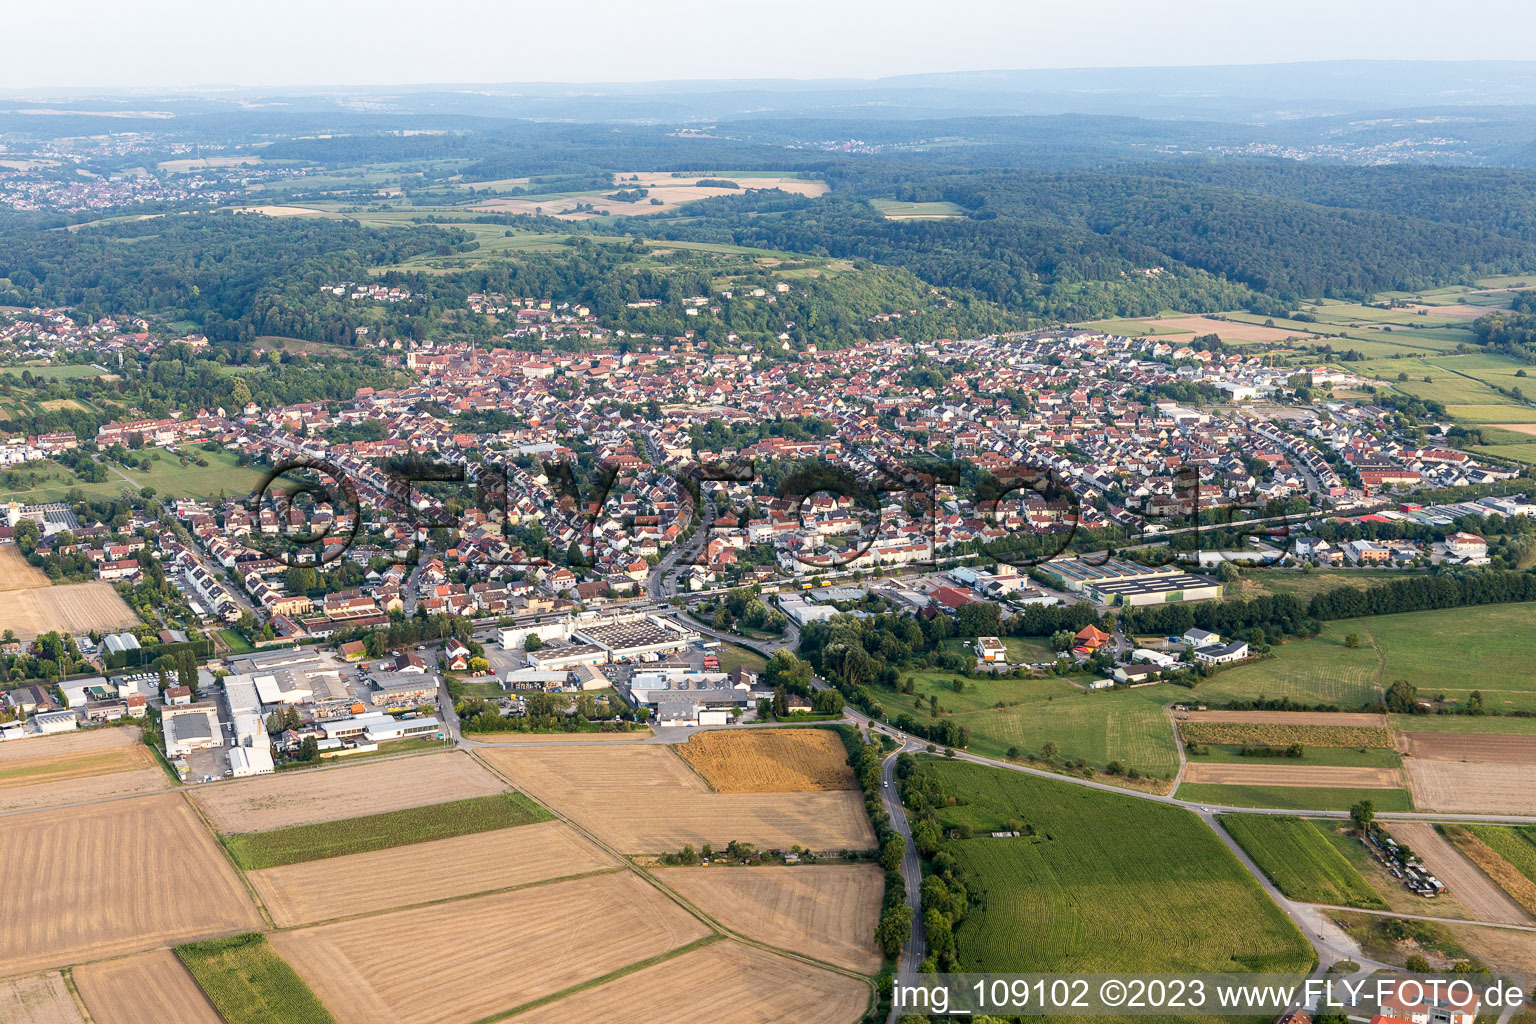 Weingarten dans le département Bade-Wurtemberg, Allemagne vu d'un drone